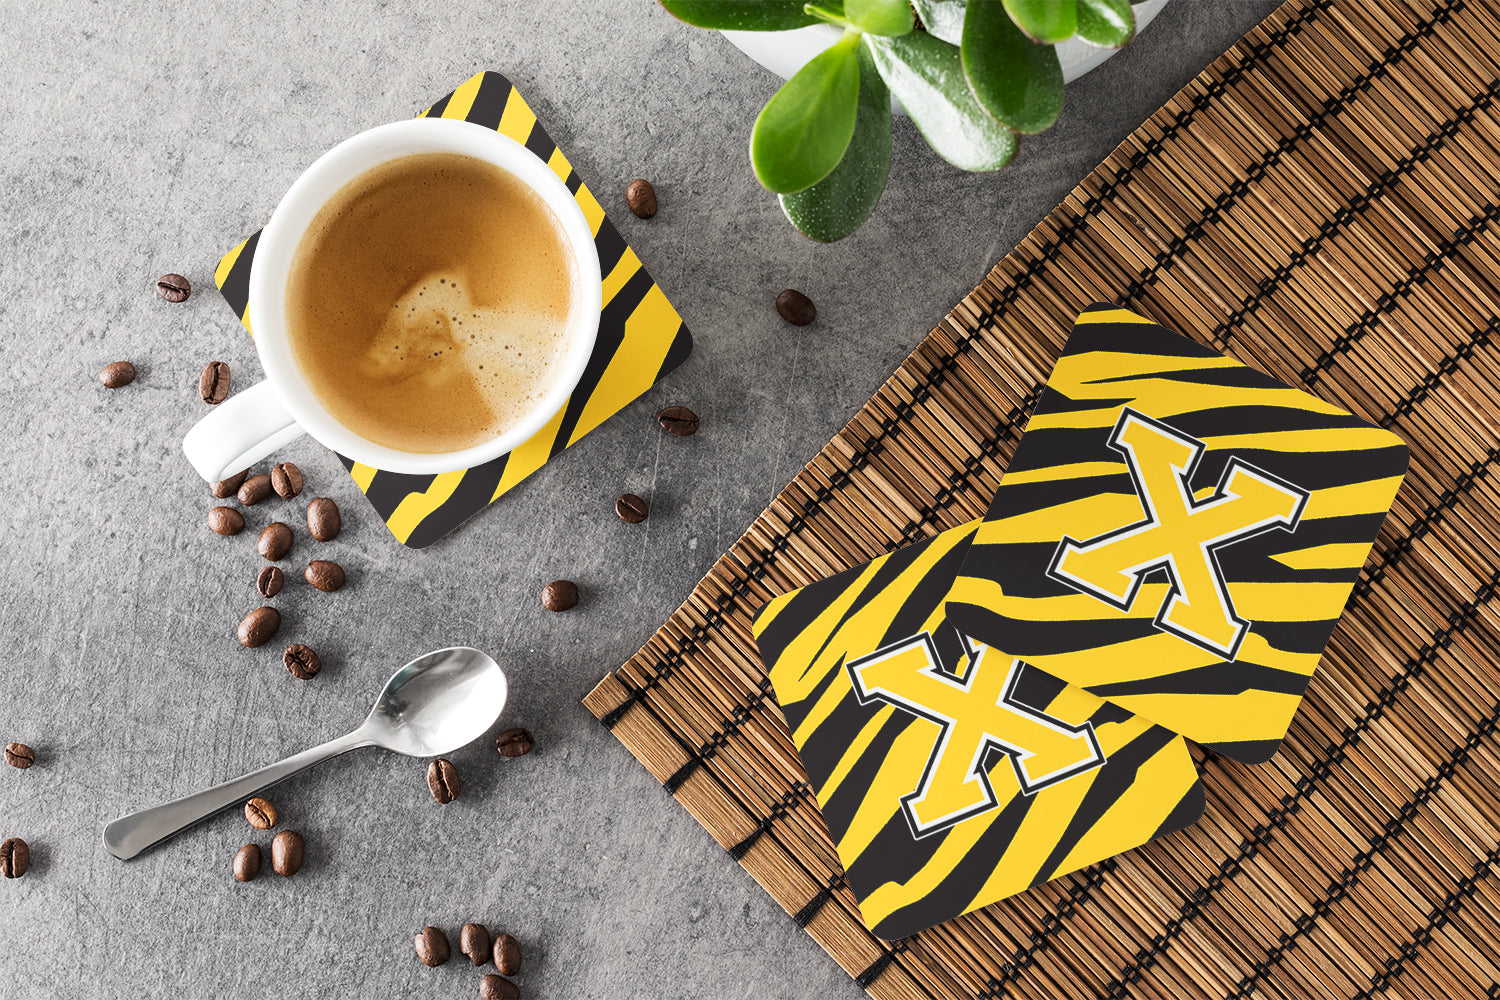 Set of 4 Monogram - Tiger Stripe - Black Gold Foam Coasters Initial Letter X - the-store.com